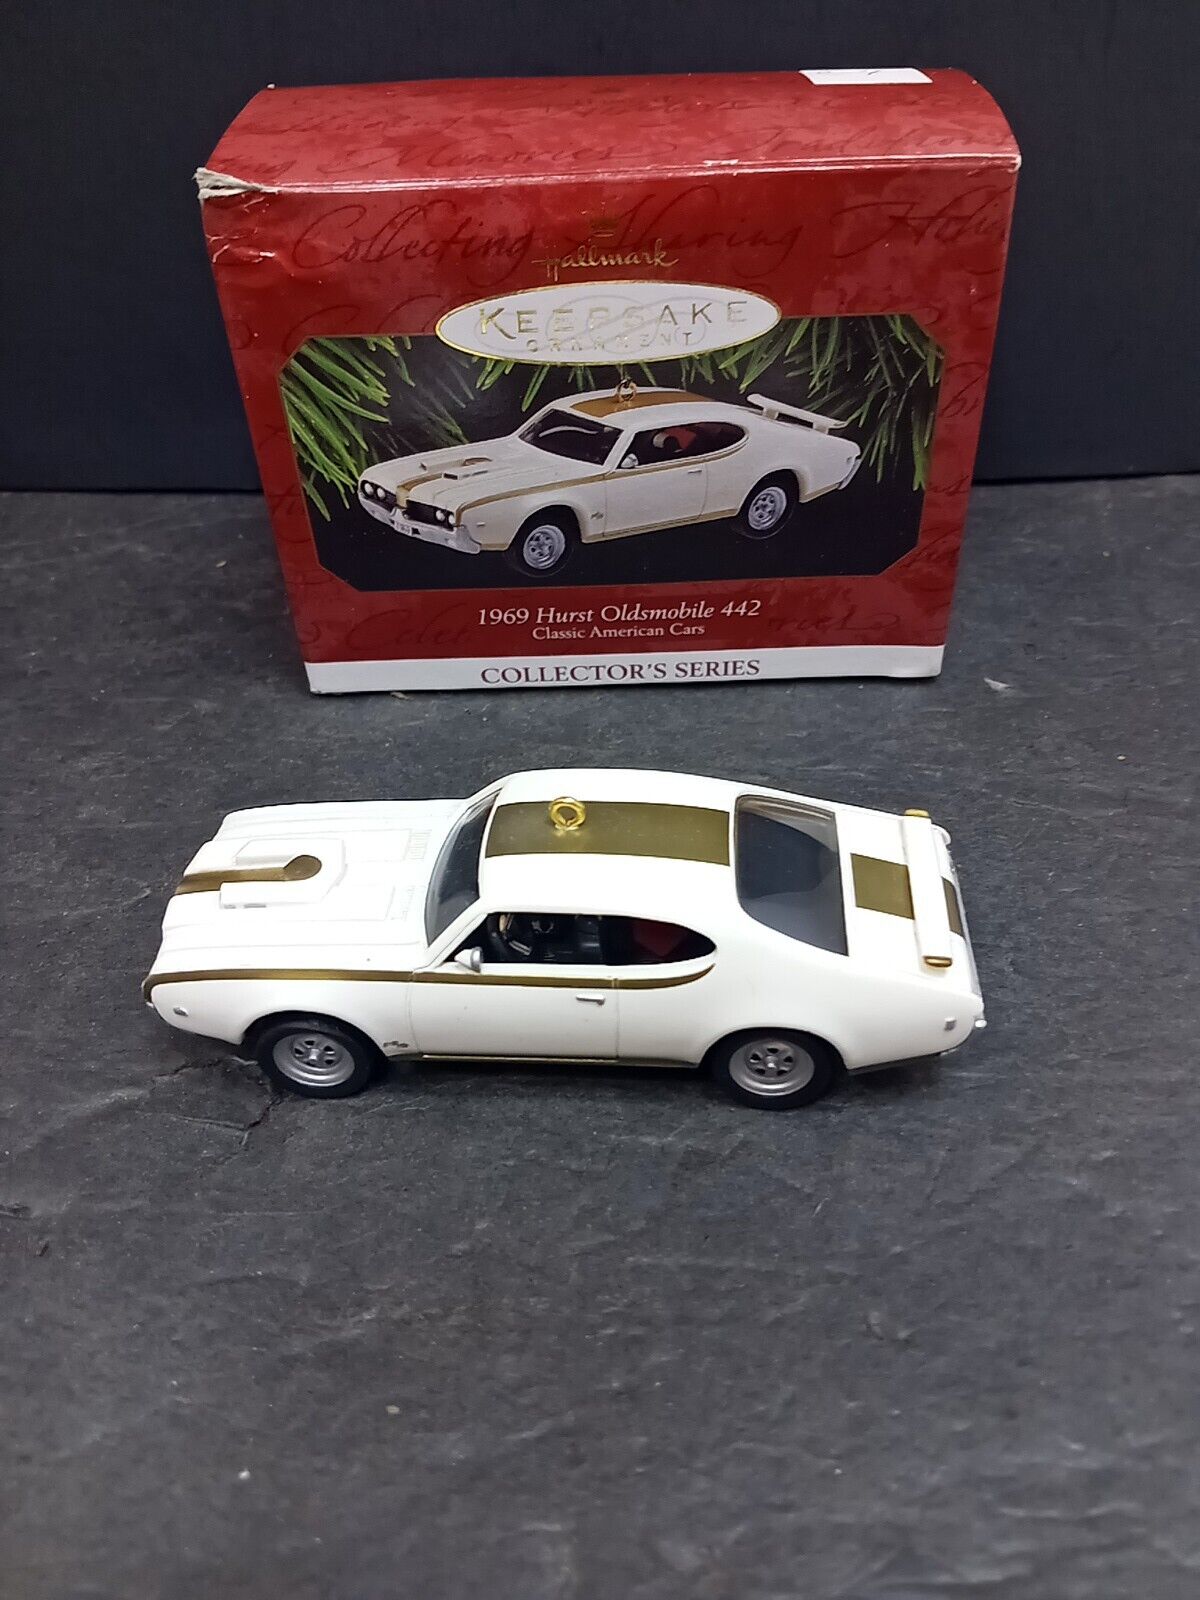 ❤️ Hallmark 1969 Hurst Oldsmobile 442 Christmas Ornament